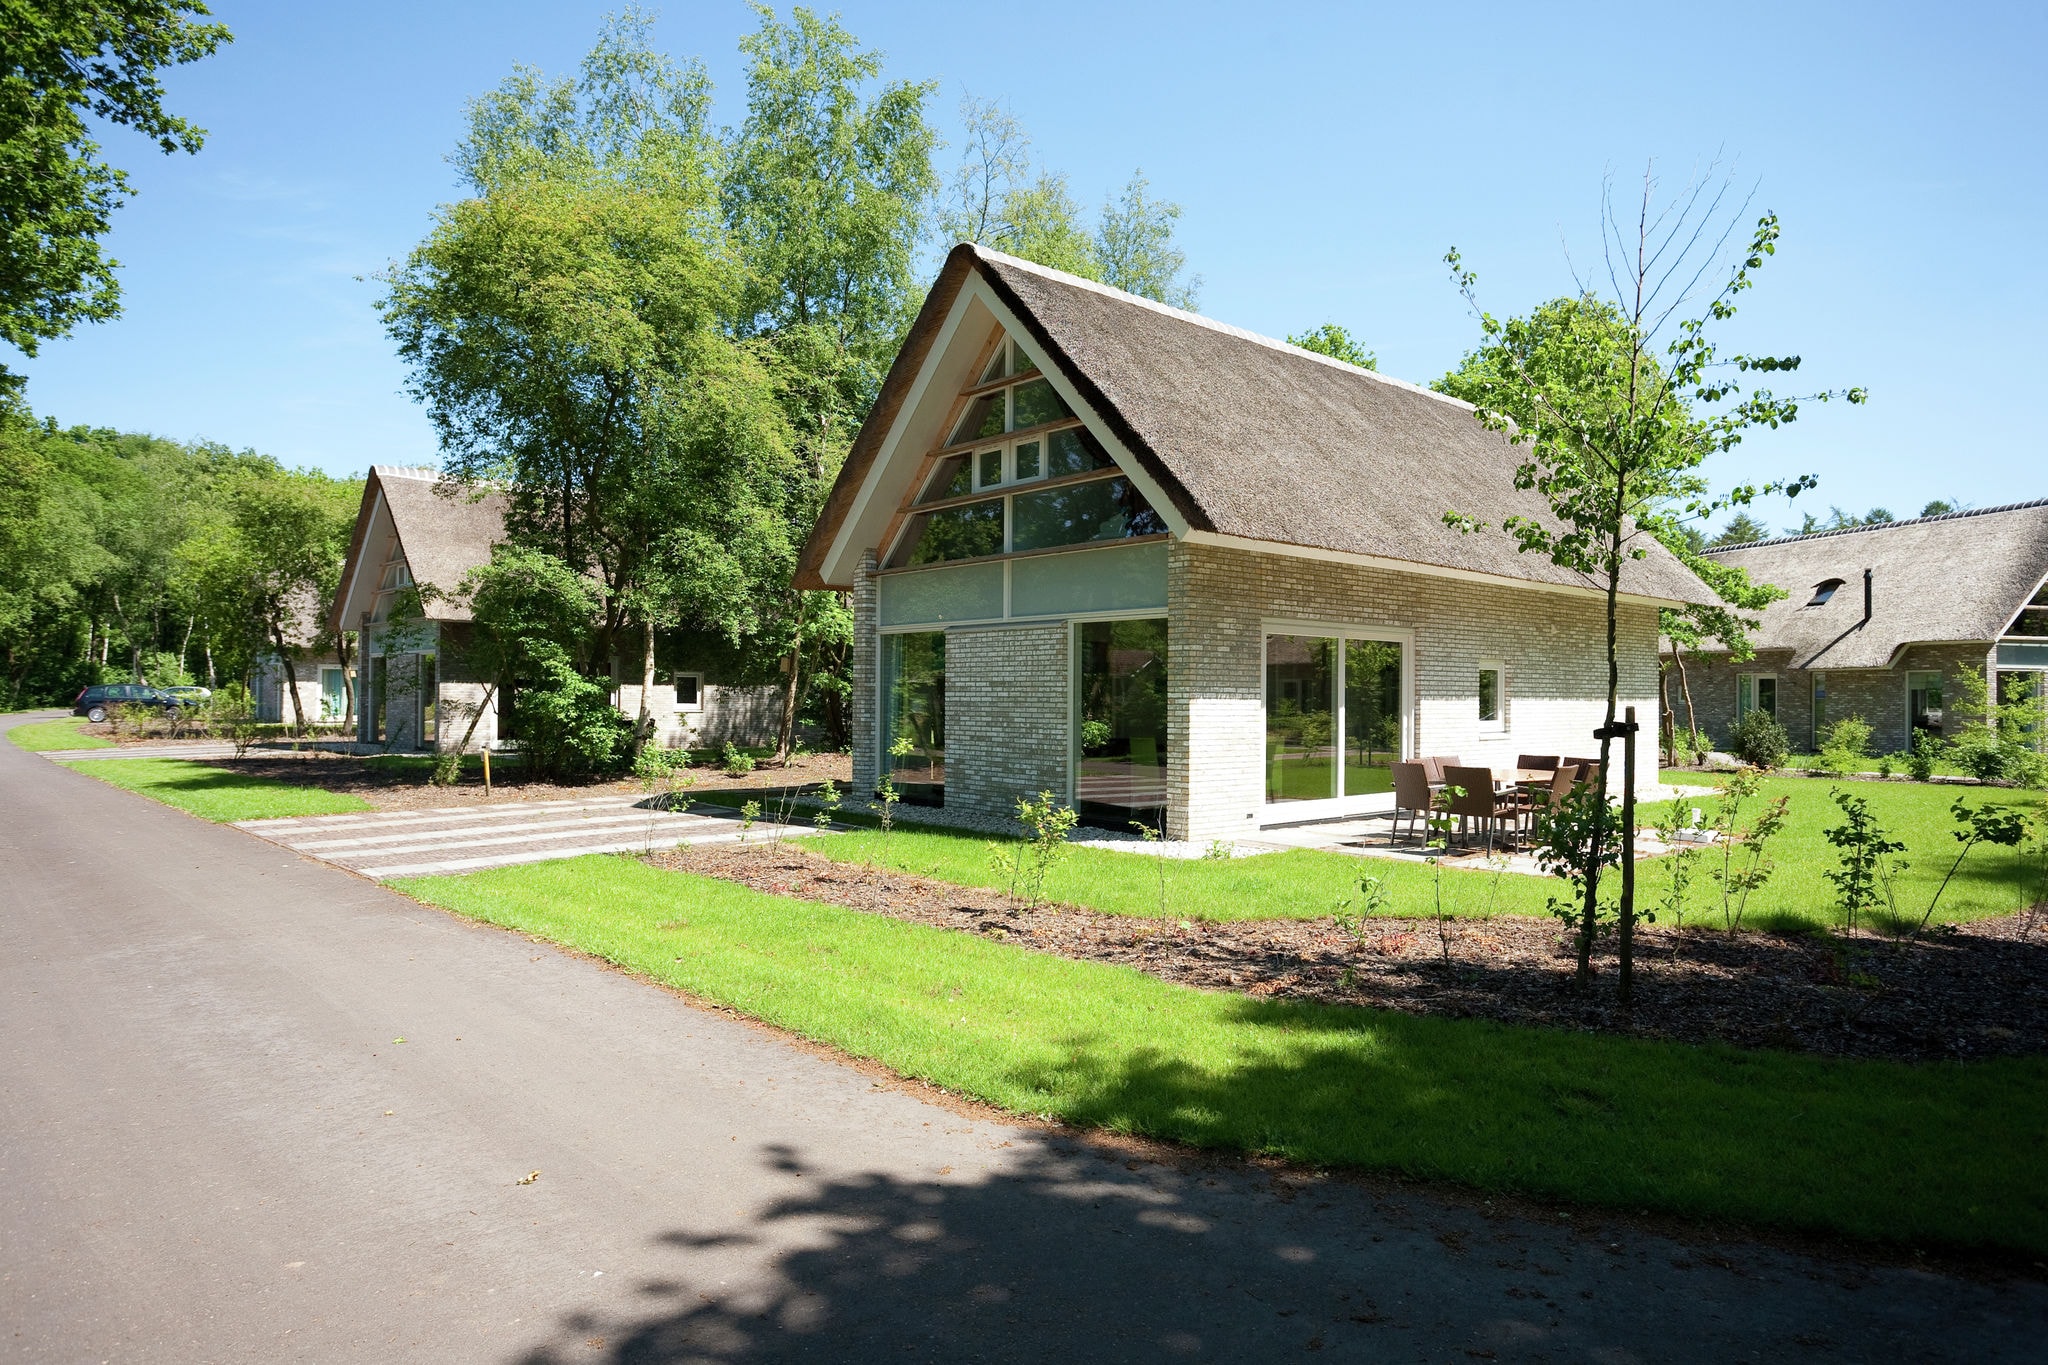 Villa en chaume avec 2 salles de bain, à 8 km d'Hoogeveen